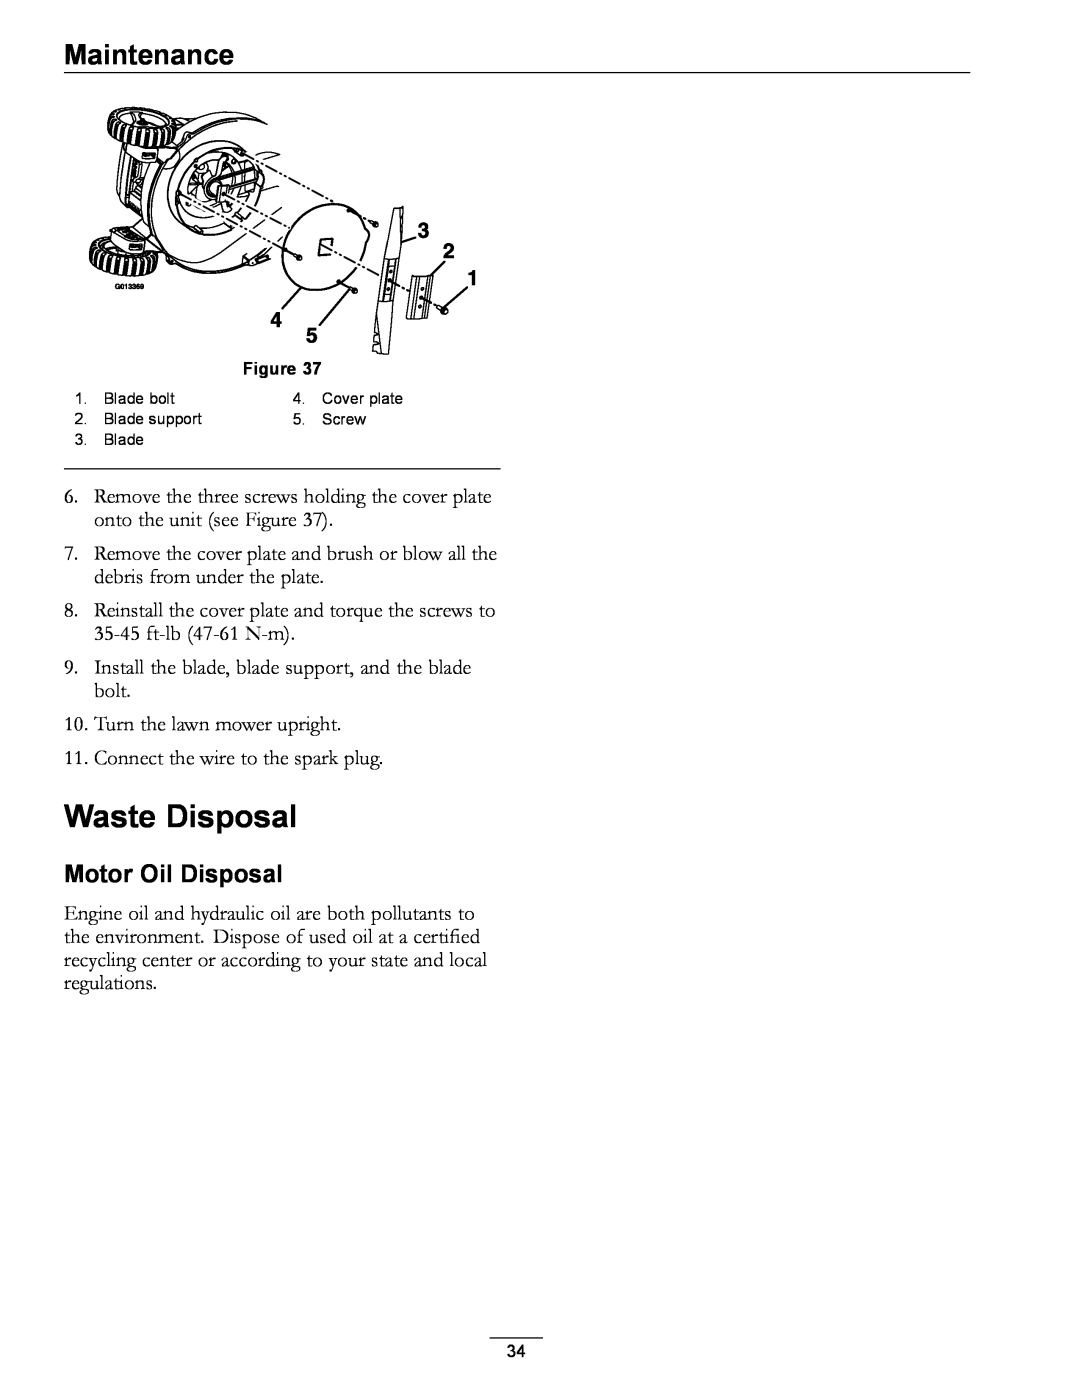 Exmark 000 & higher, 850 manual Waste Disposal, Motor Oil Disposal, Maintenance 